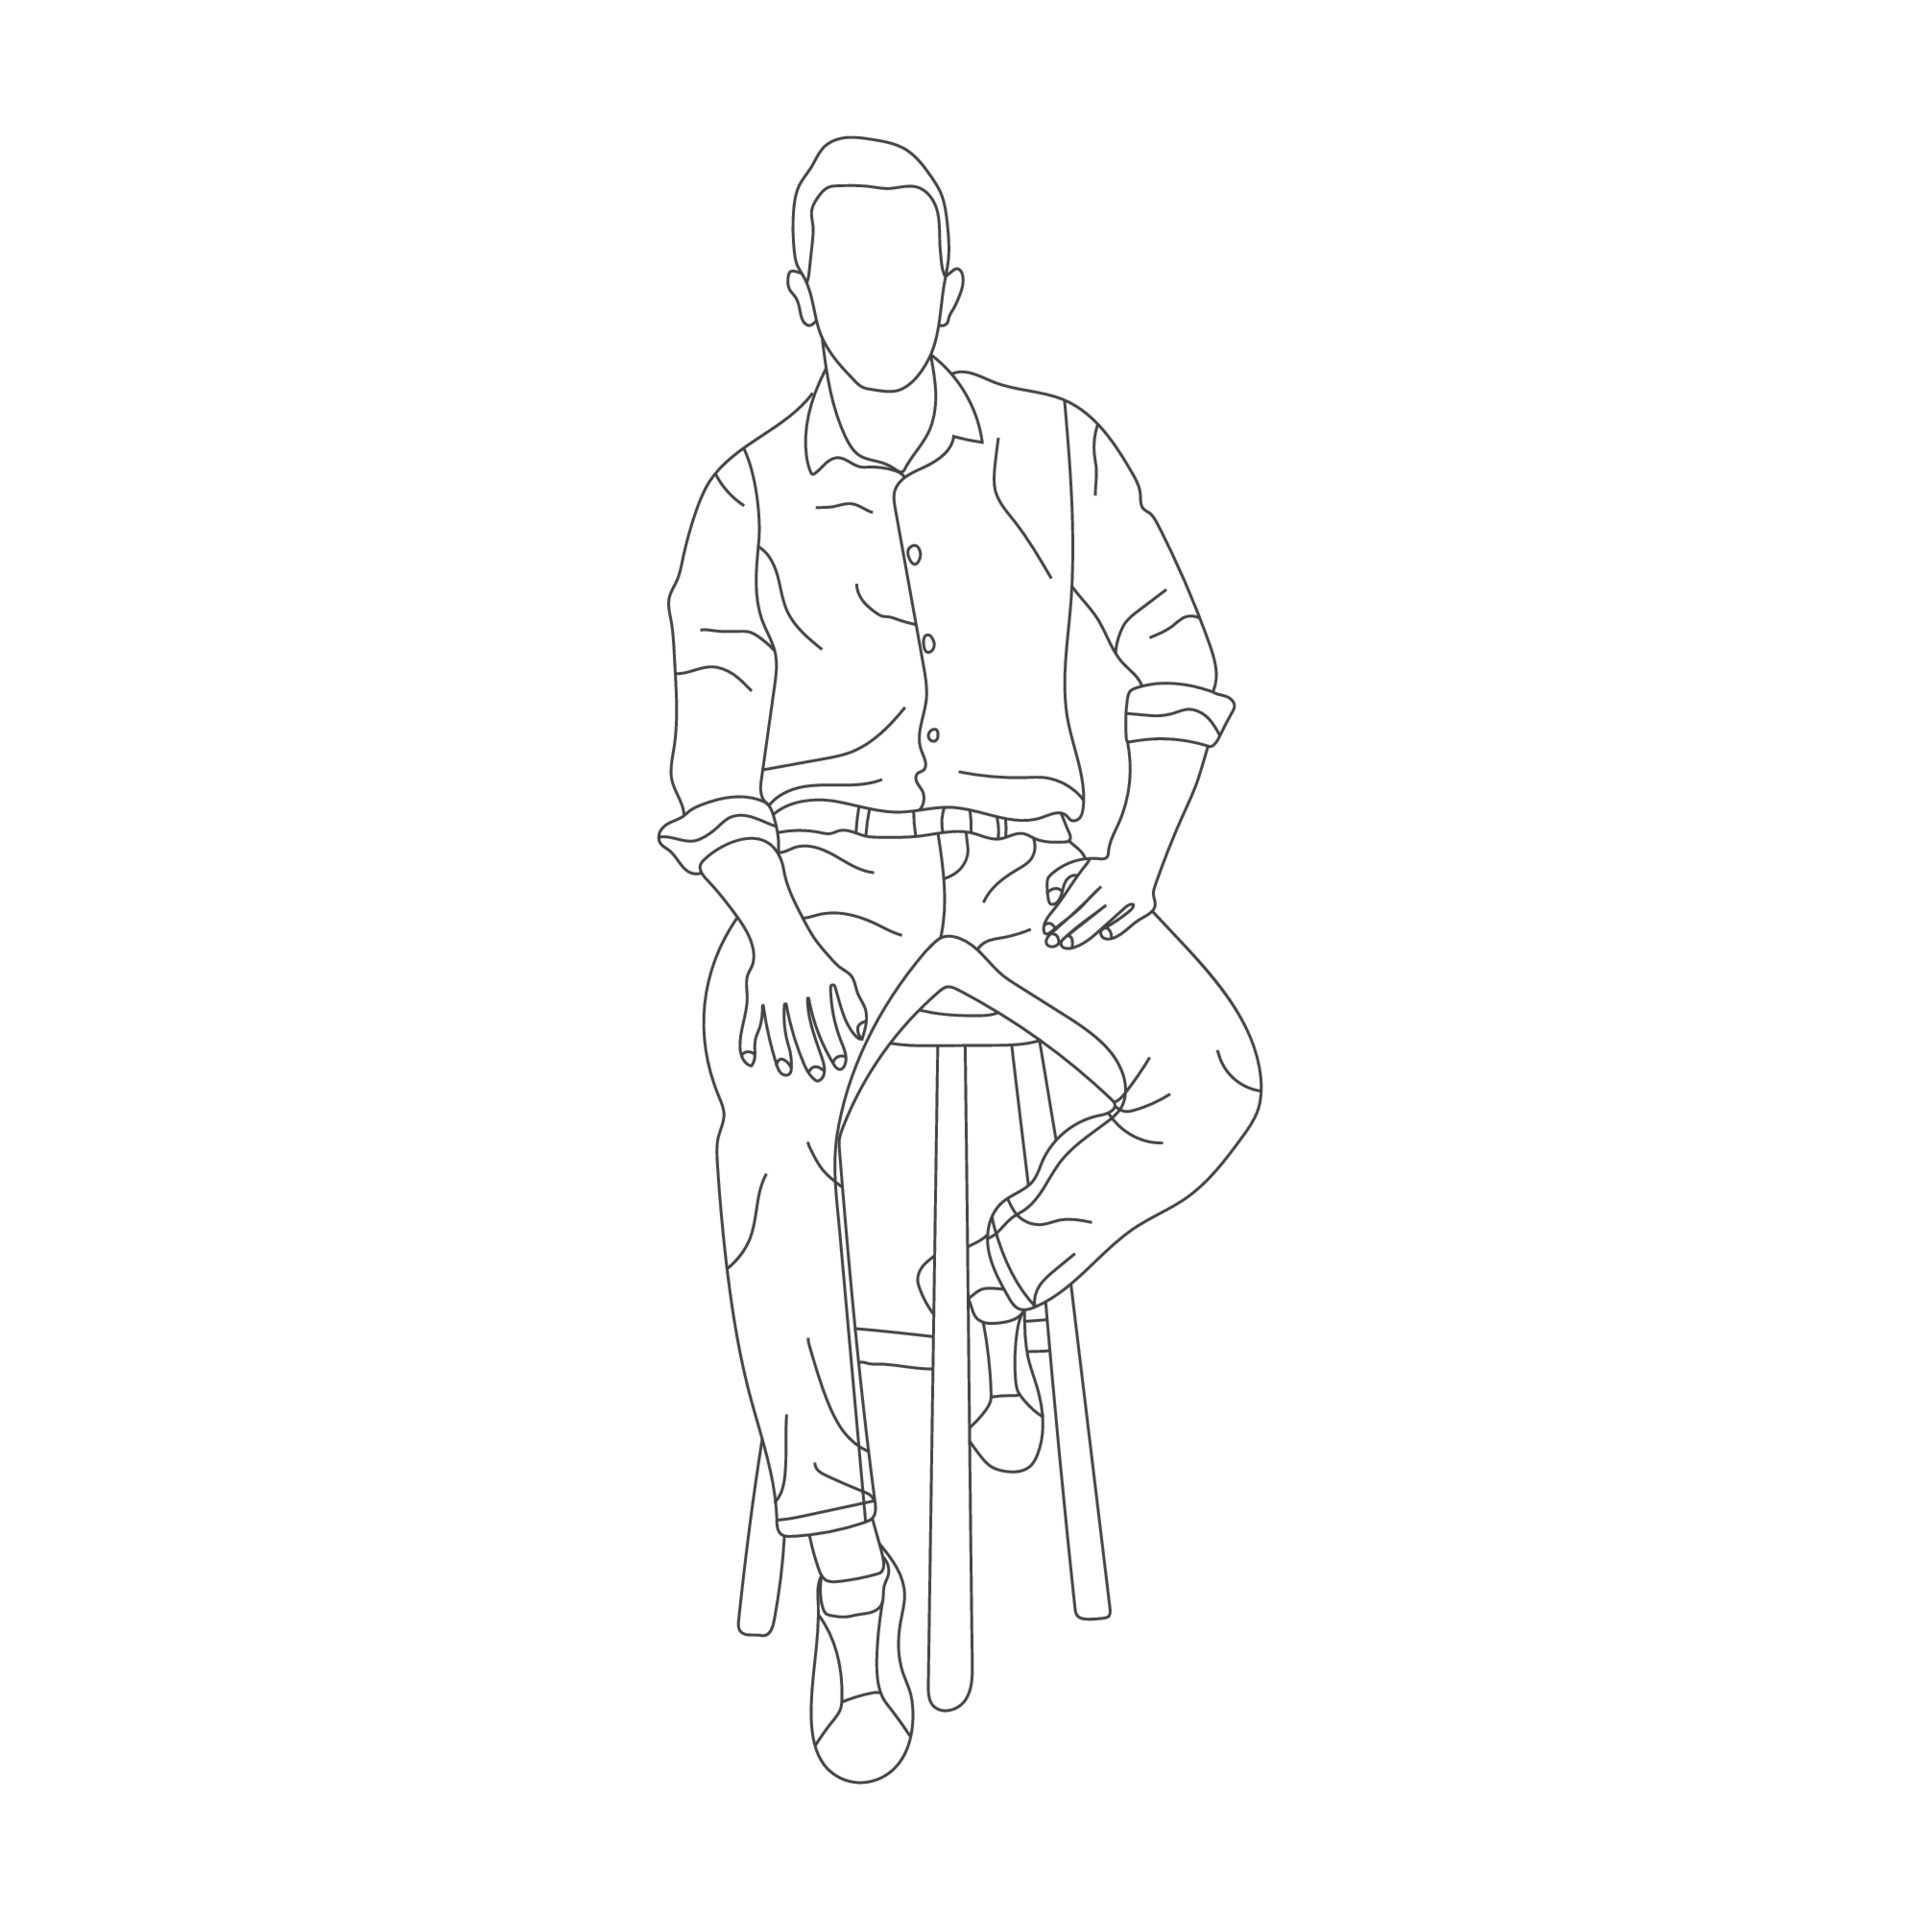 Hand Drawn Sketch Man Sitting On Stock Illustration 1442598338   Shutterstock